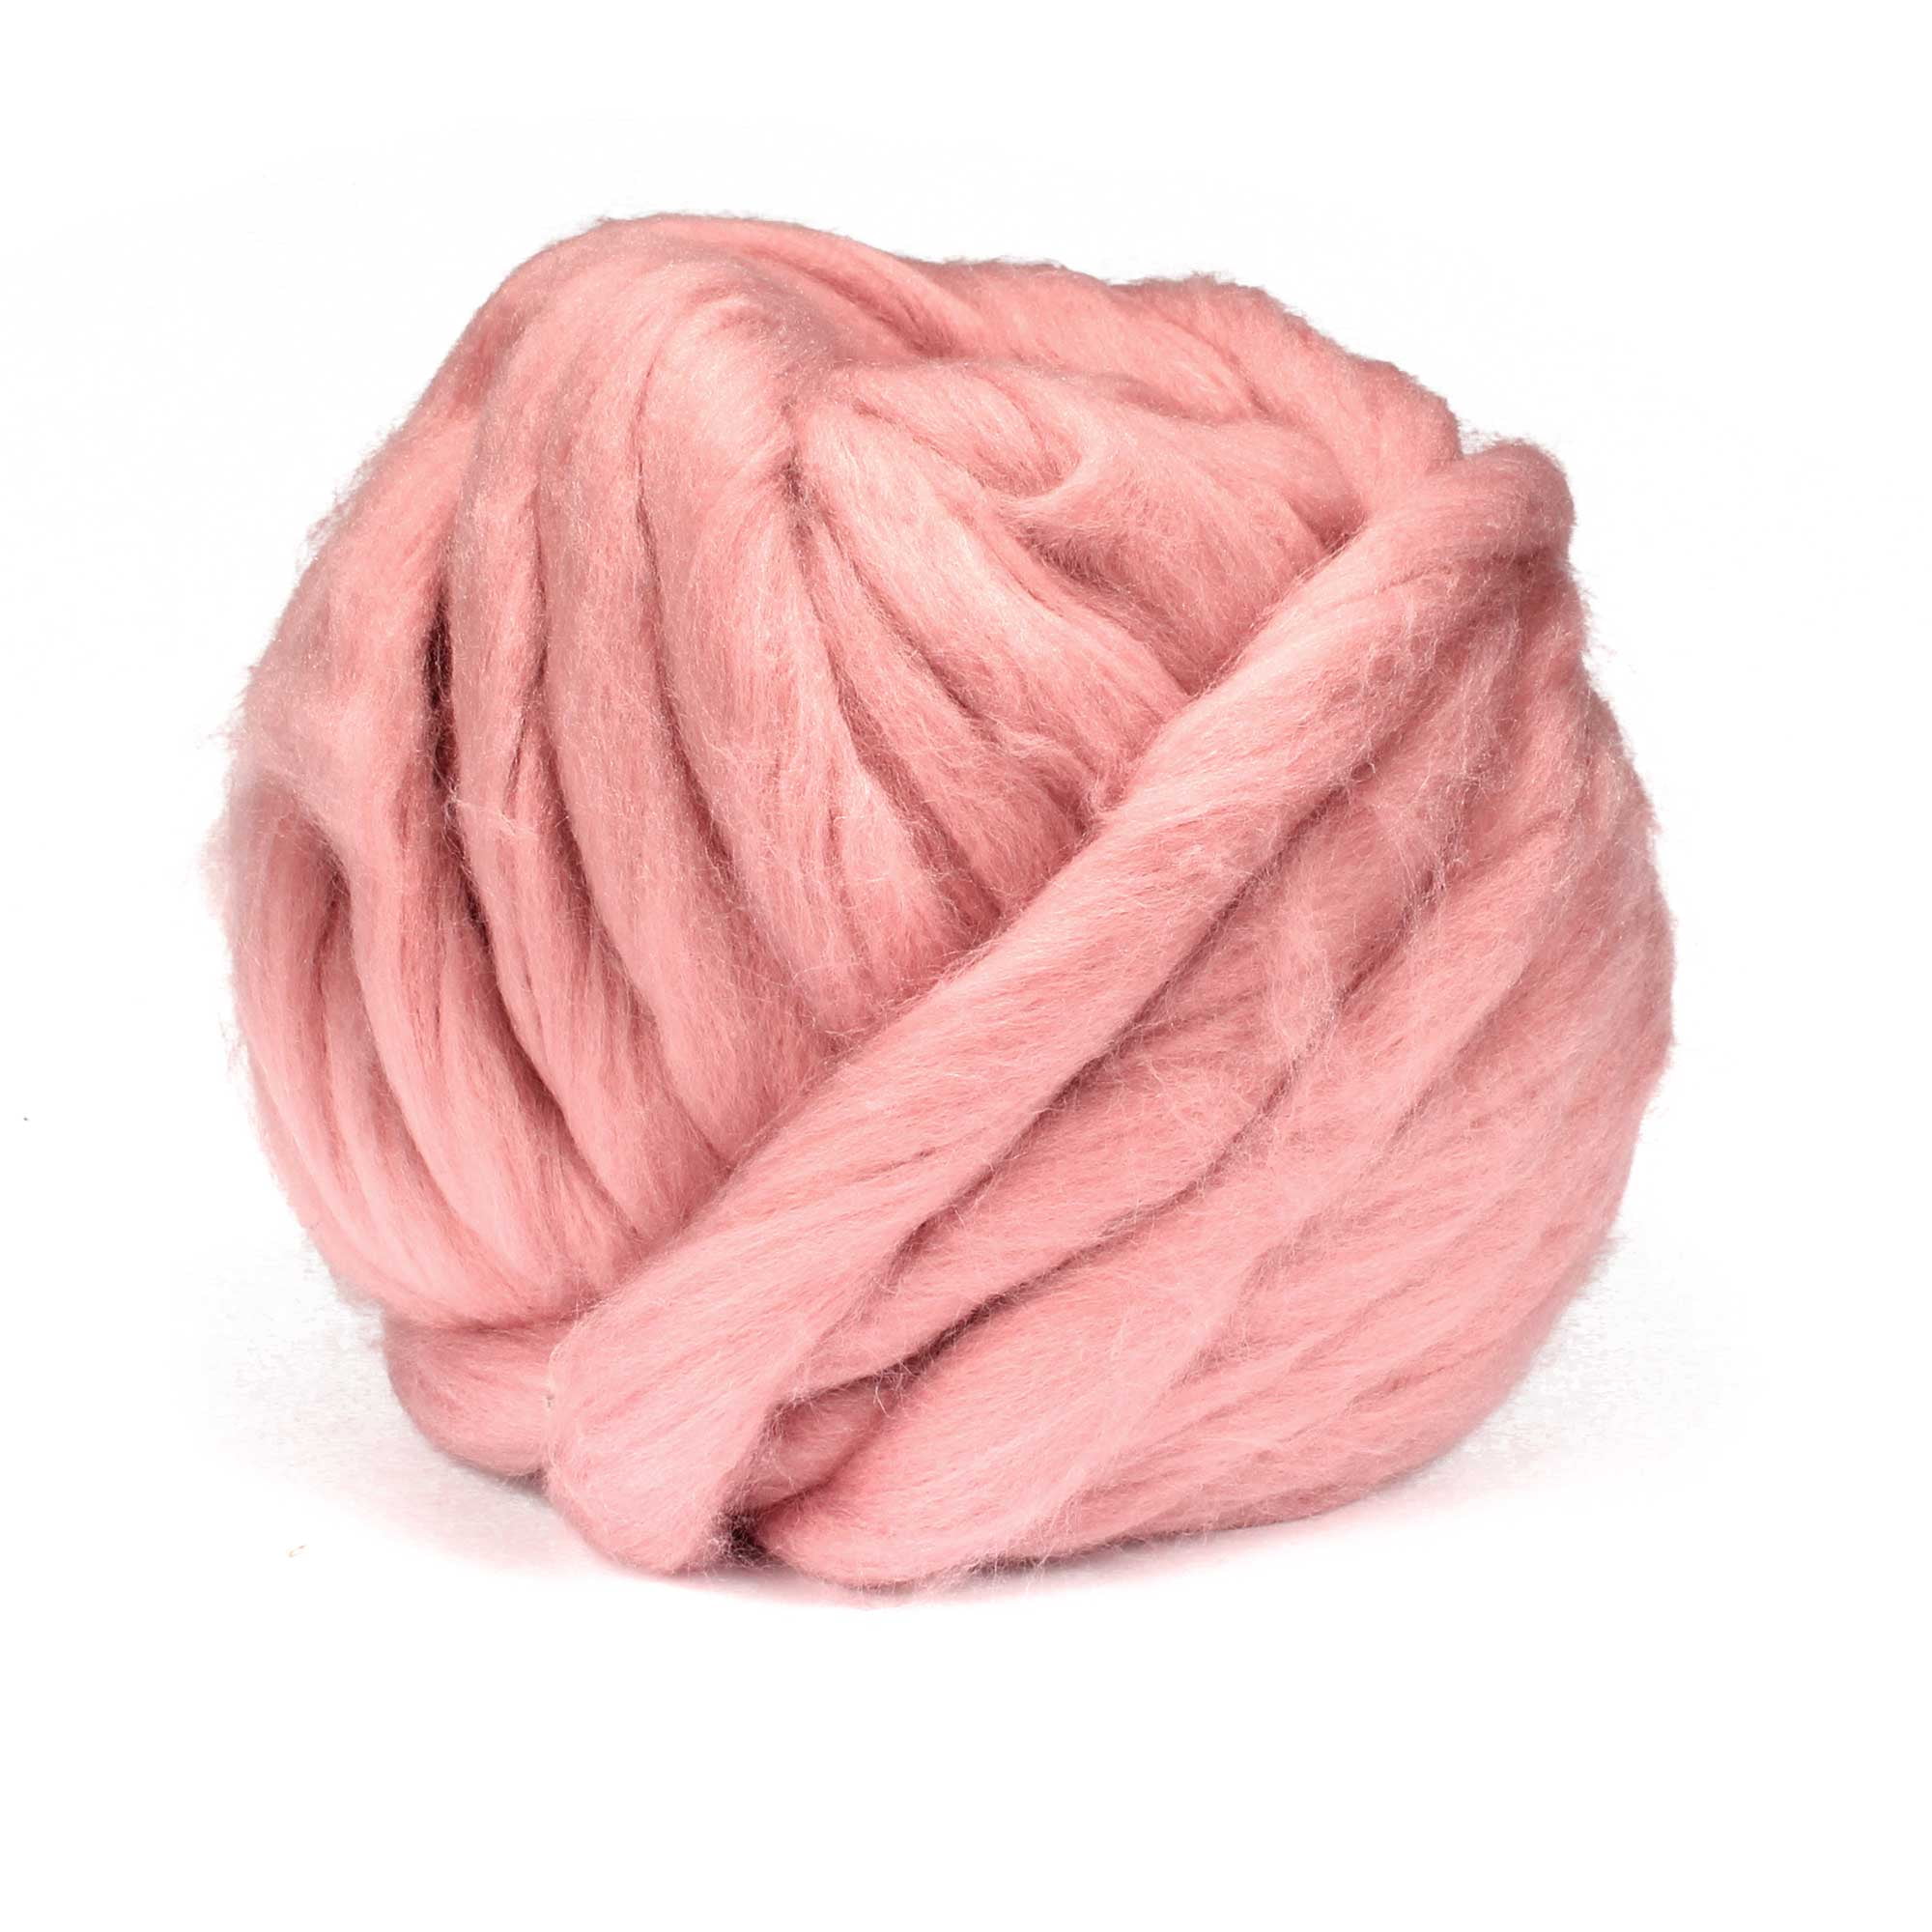 super chunky yarn for arm knitting